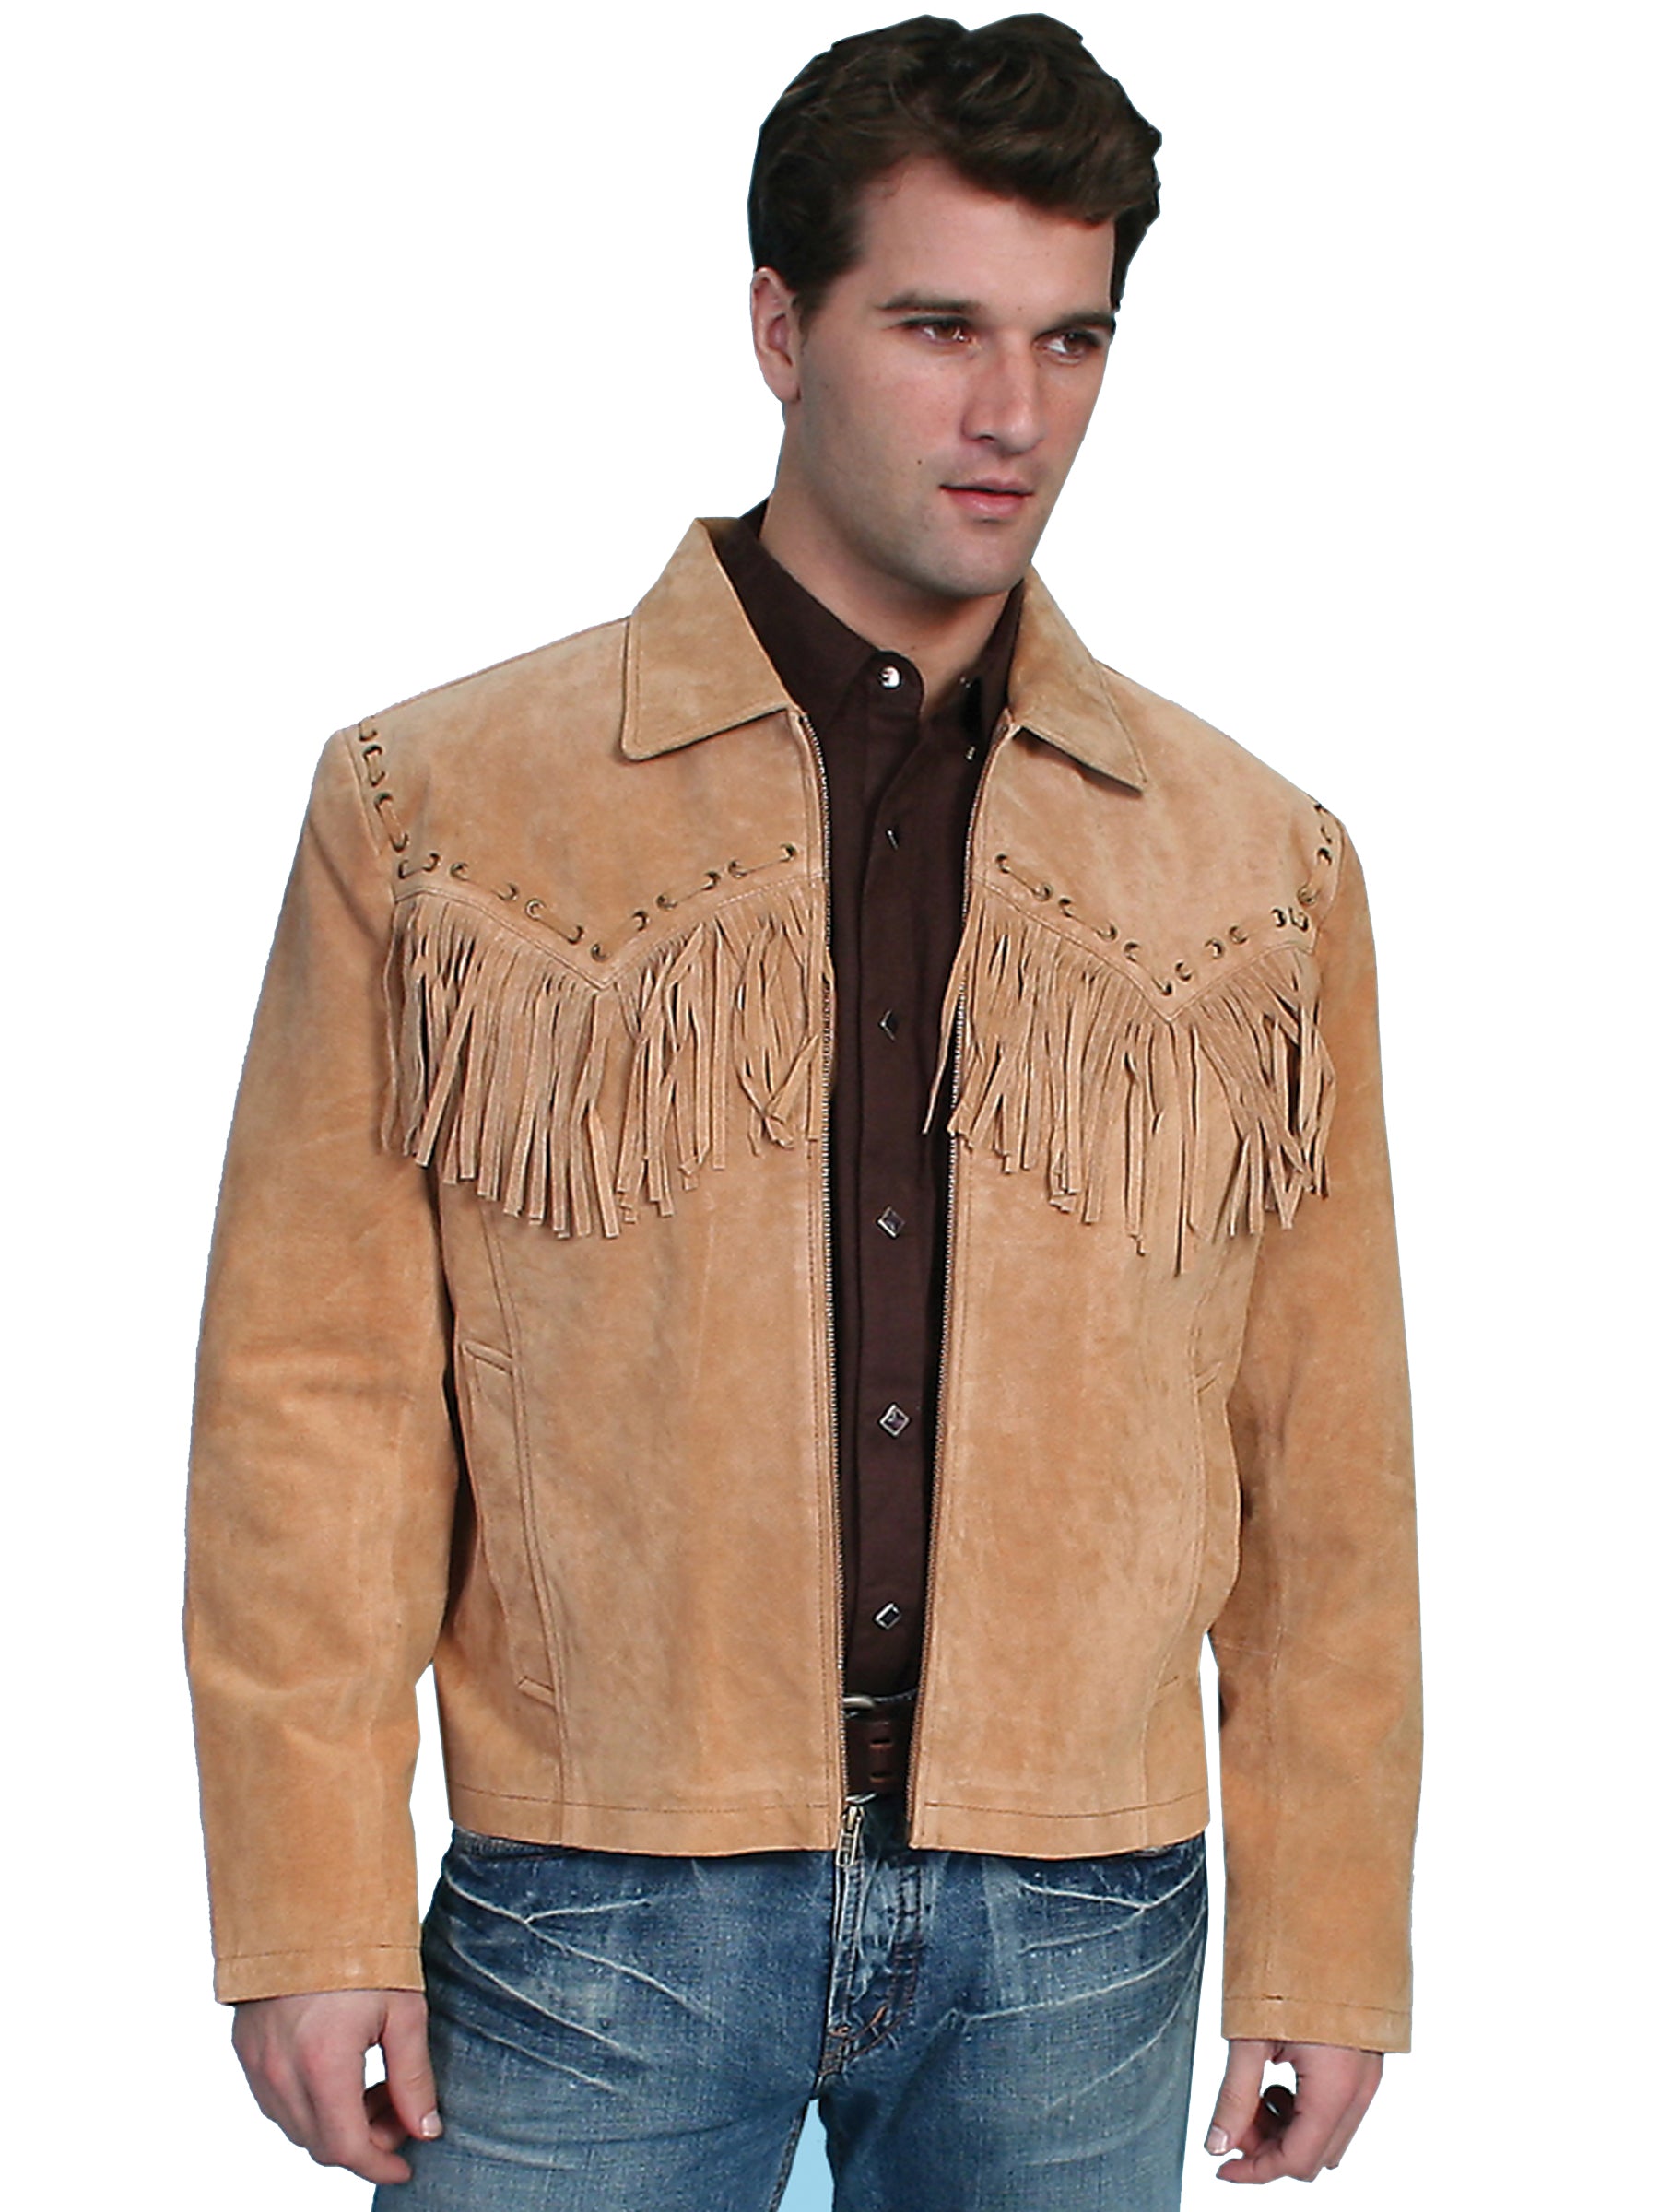 Типа ковбой. Mens Western Jacket with Fringe. Western Cowboy Jacket. Torras куртка замшевая. Куртка с бахромой мужская.